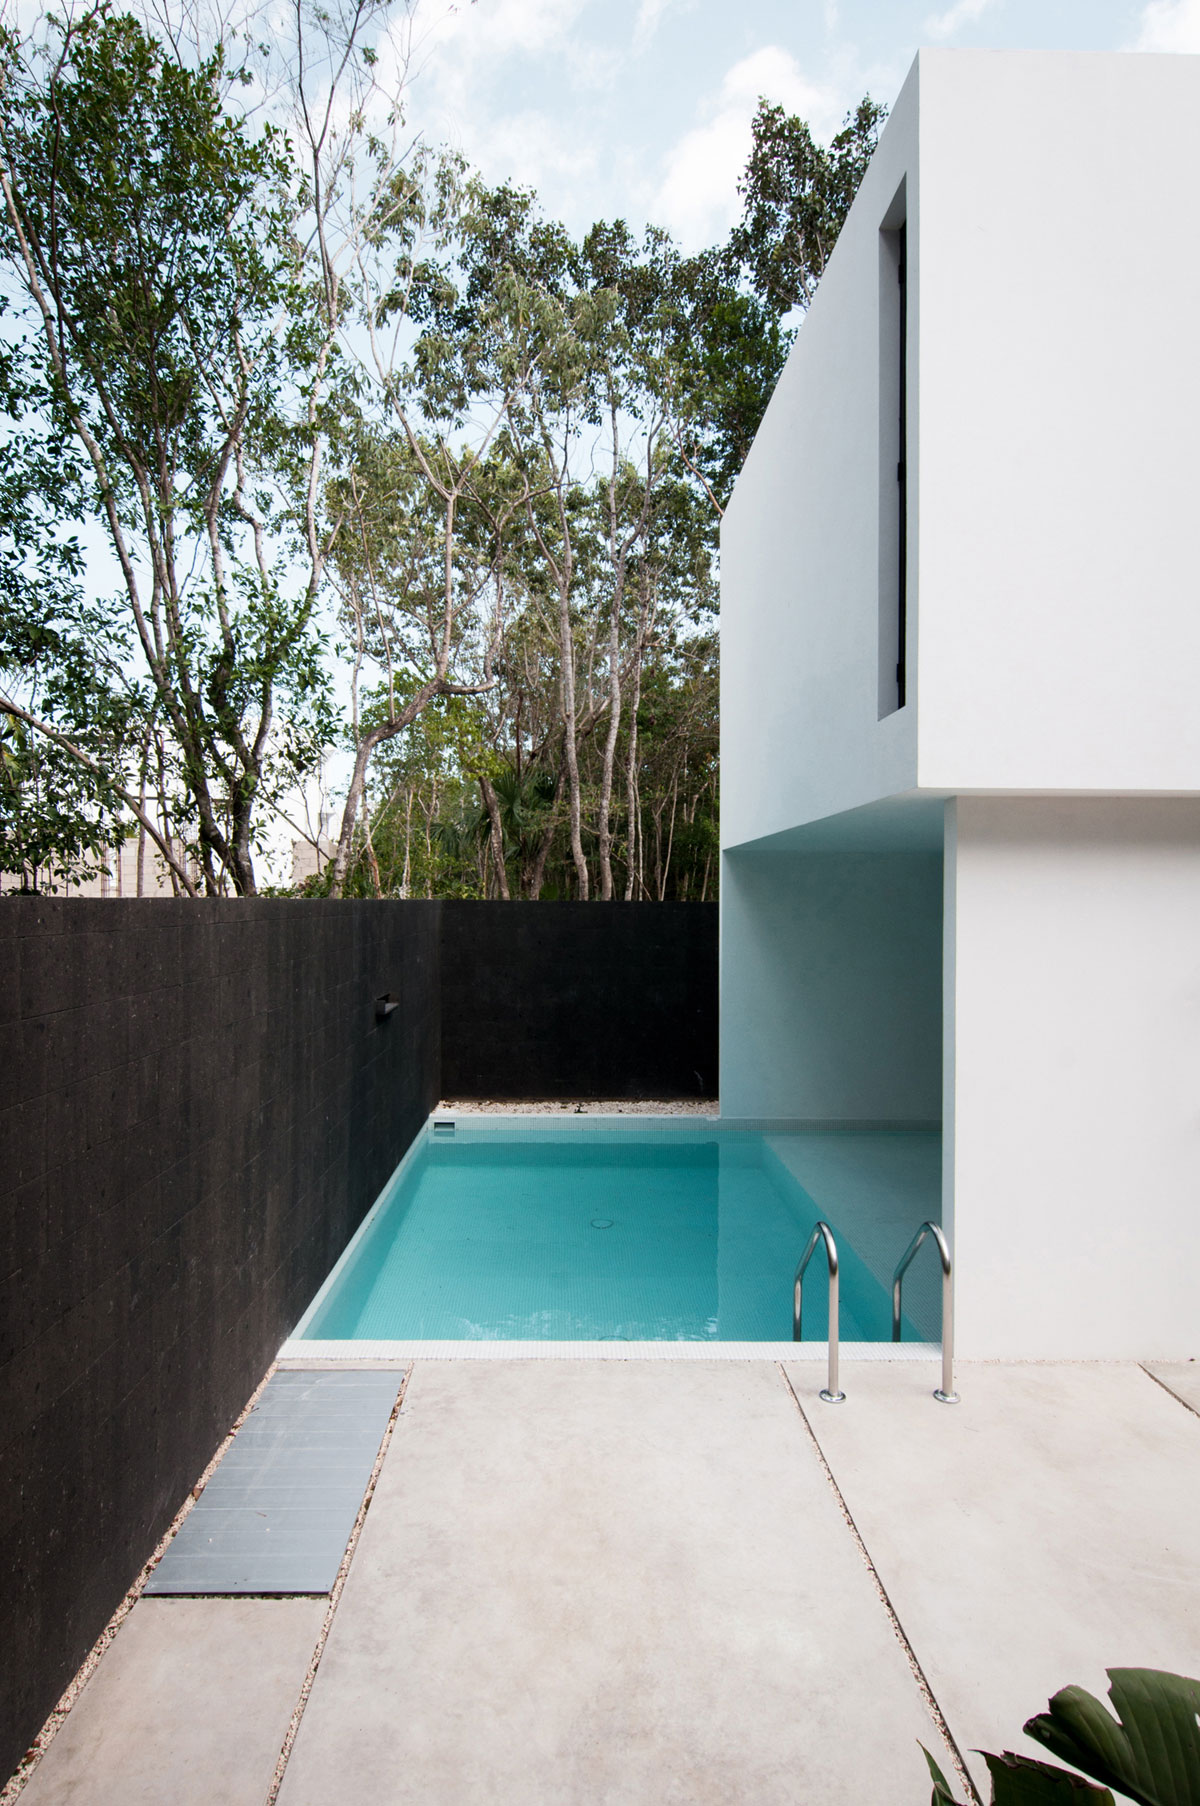 Casa Garcias in Mexico by Warm Architects